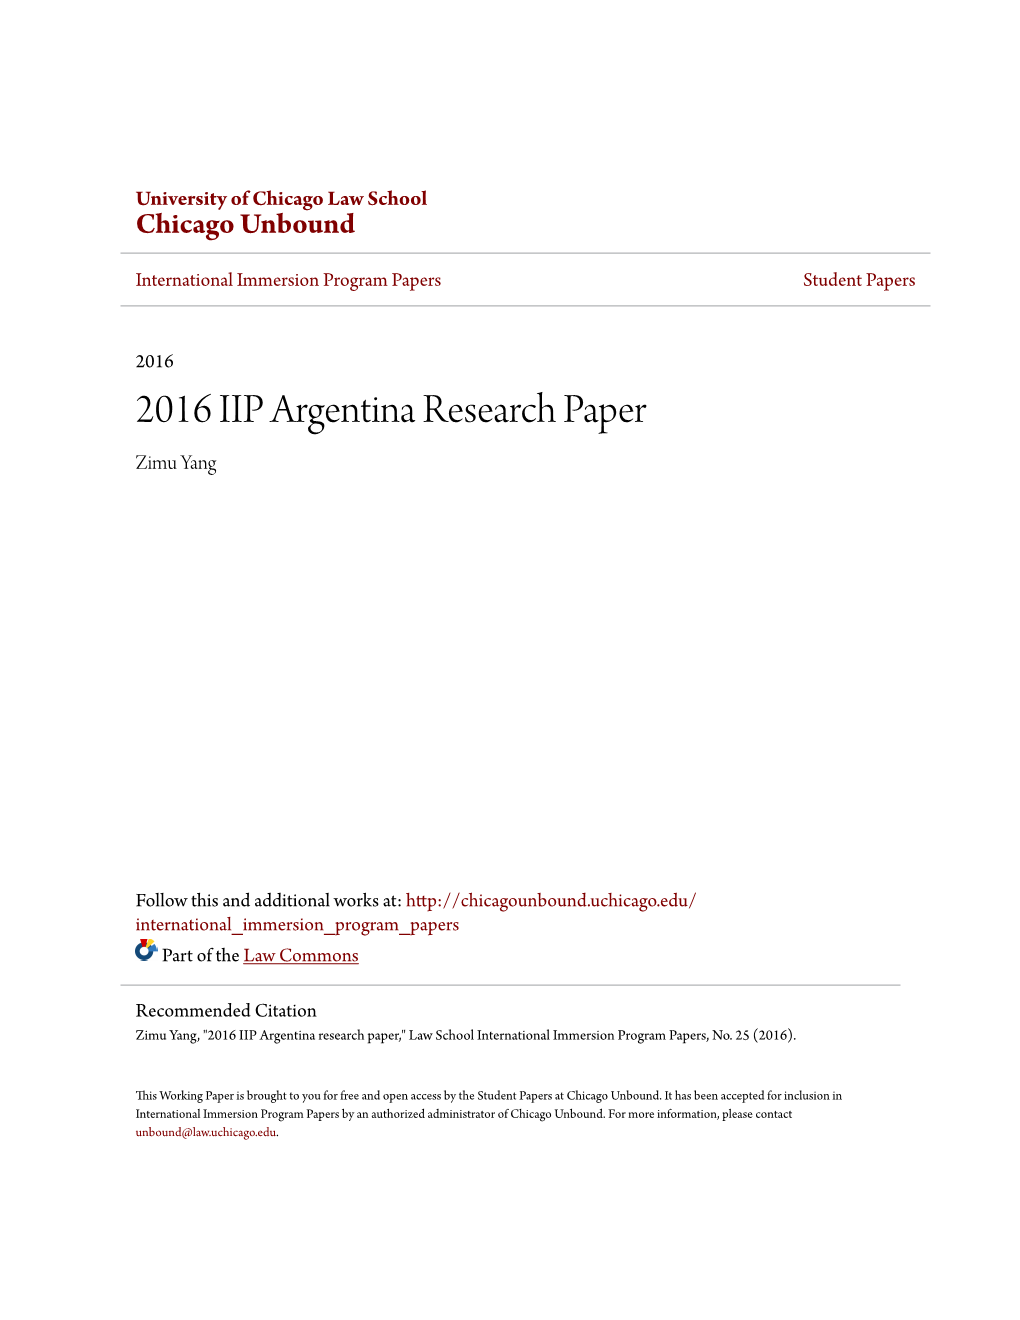 2016 IIP Argentina Research Paper Zimu Yang